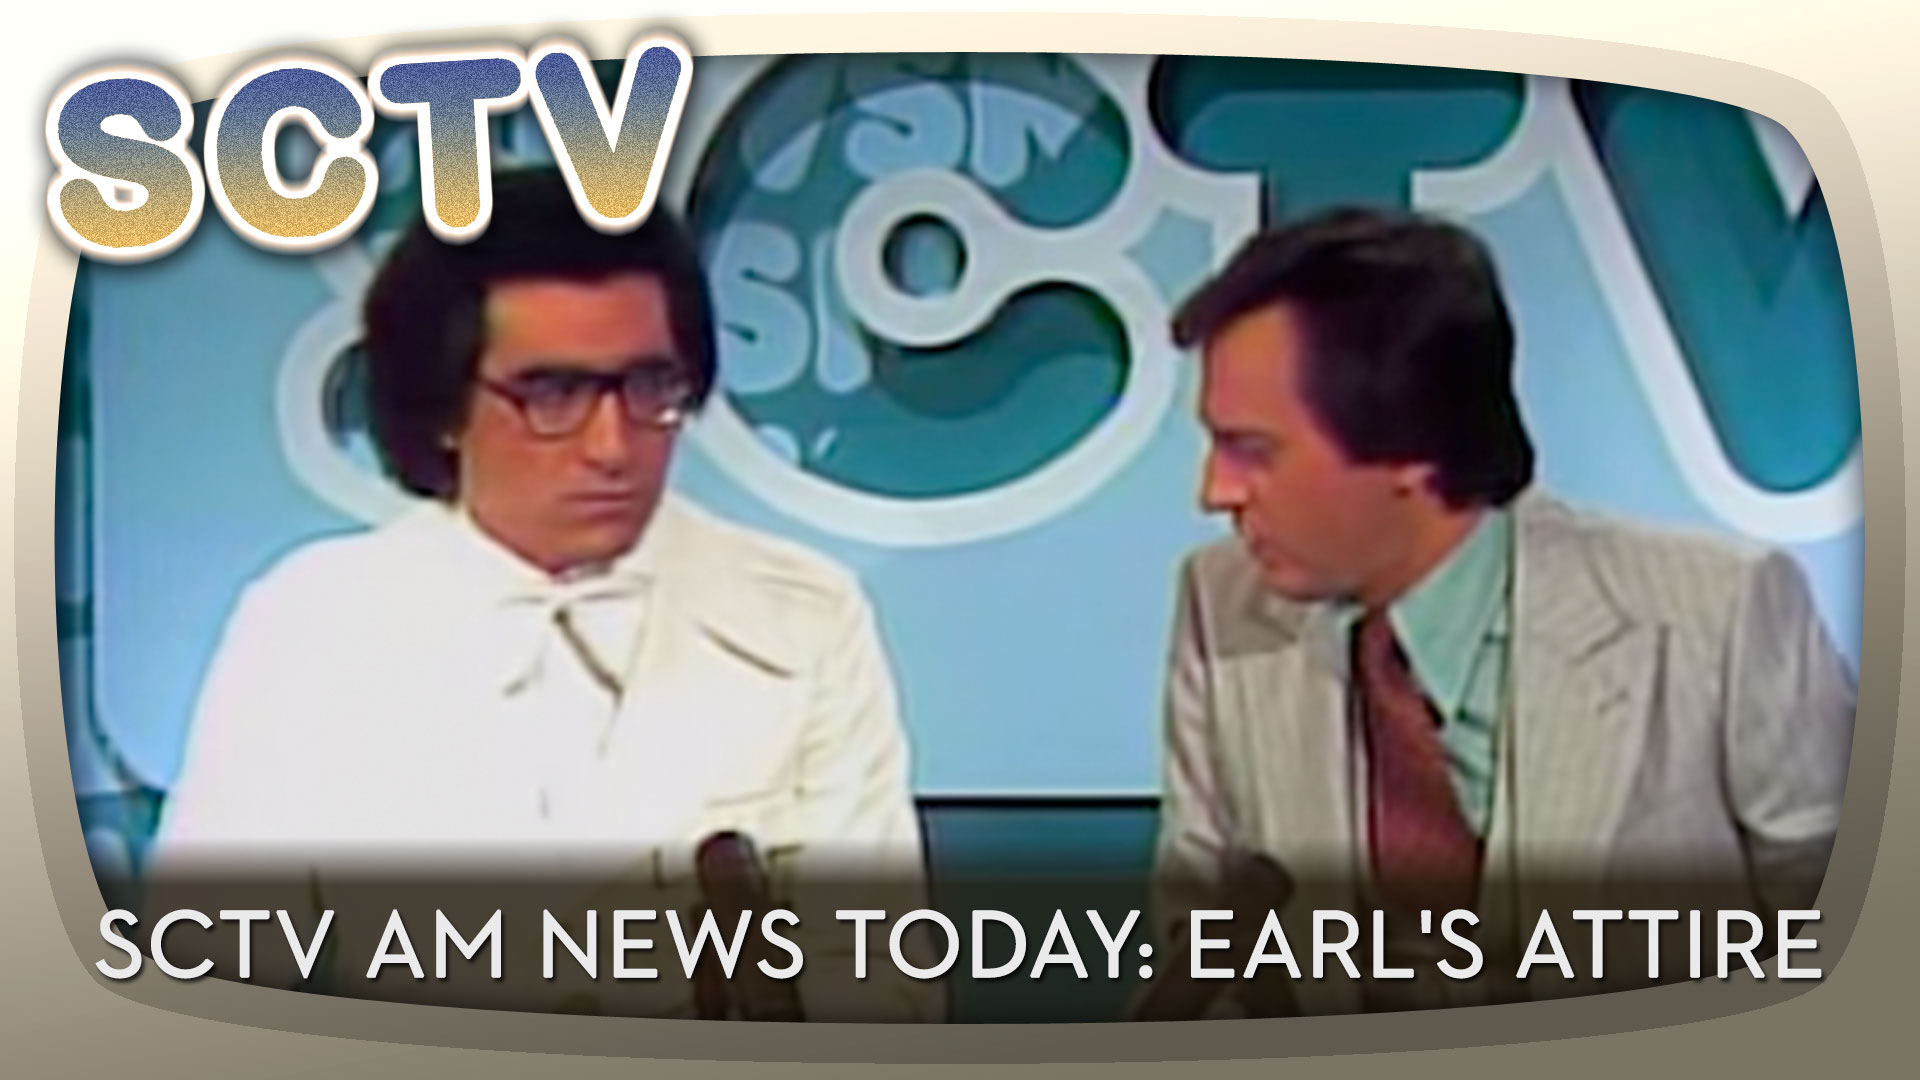 SCTV AM News Today: Earl's attire